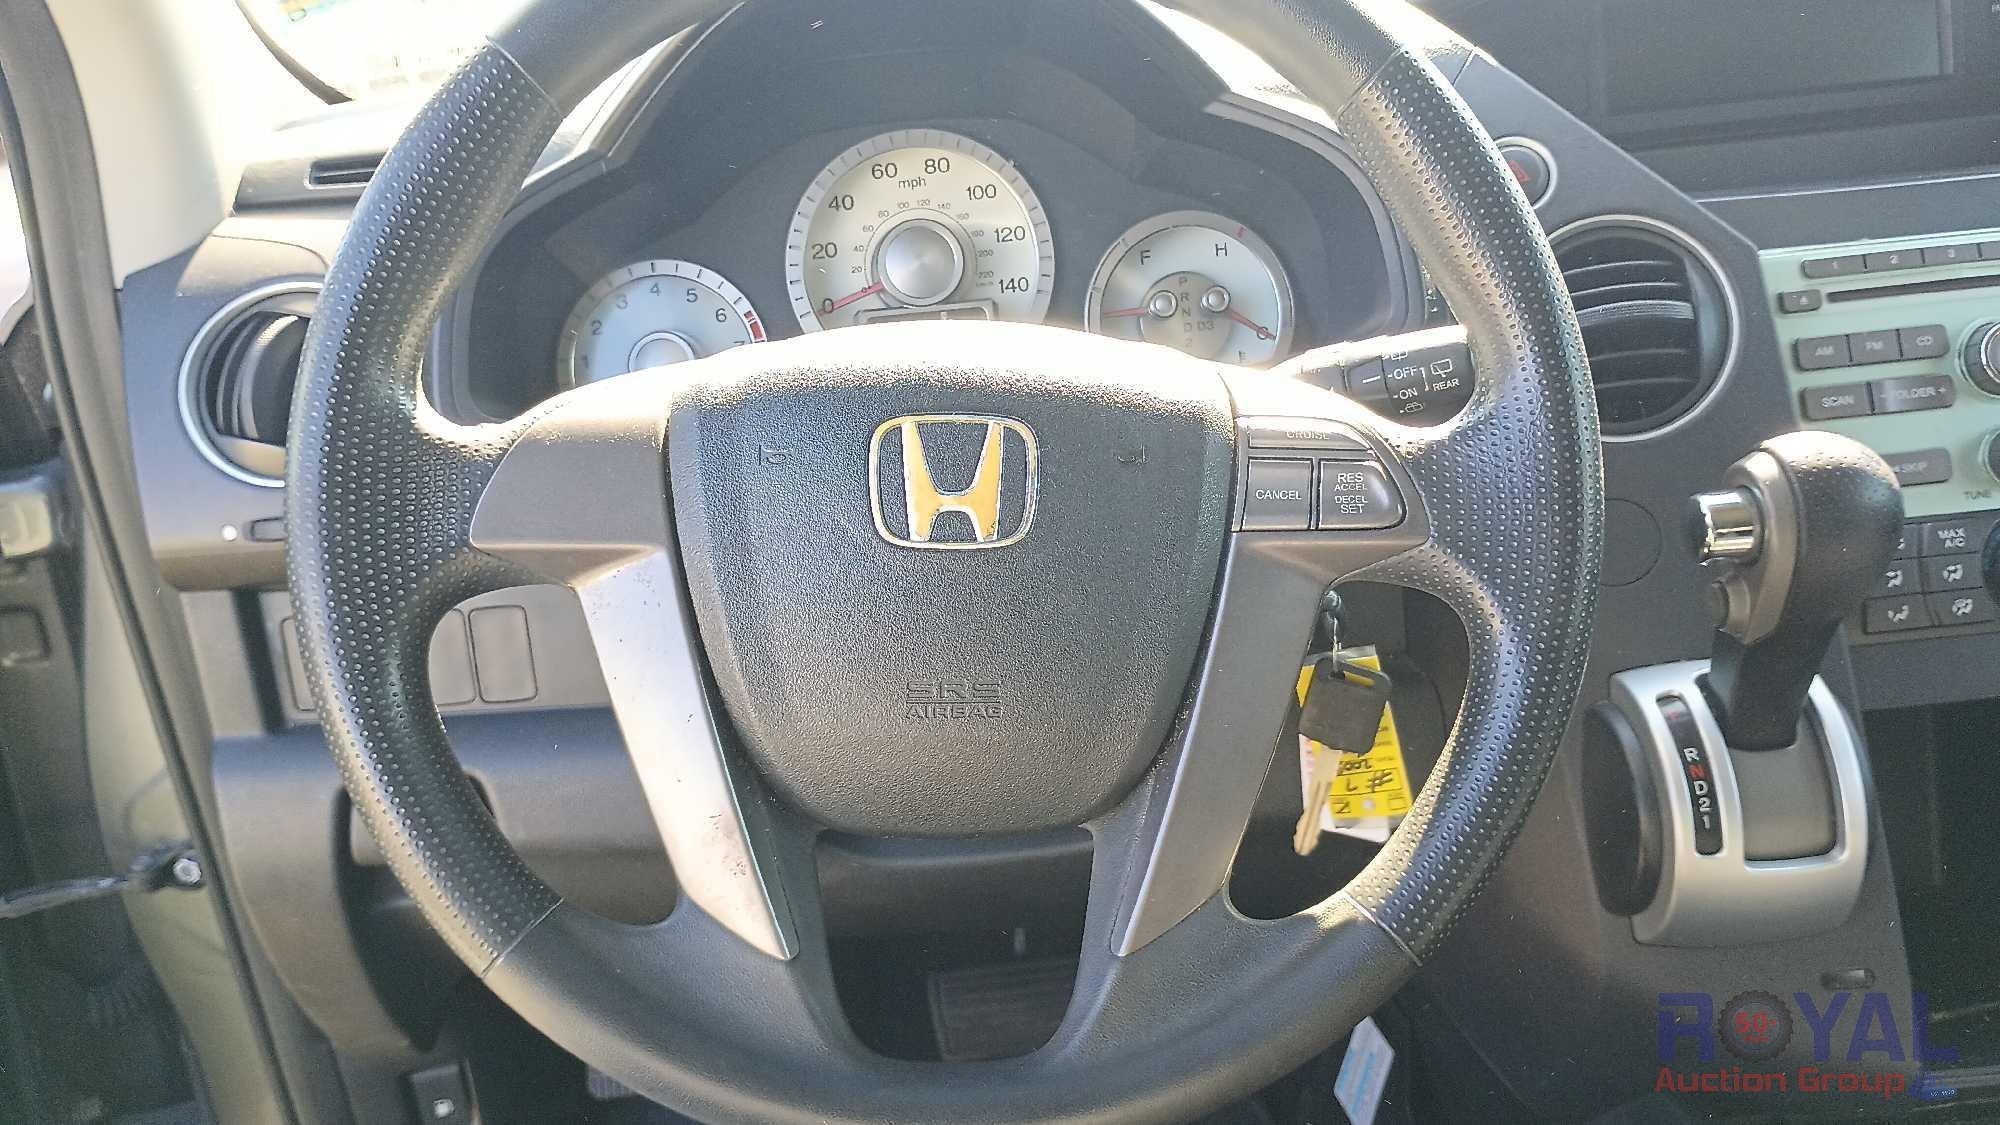 2009 Honda Pilot SUV